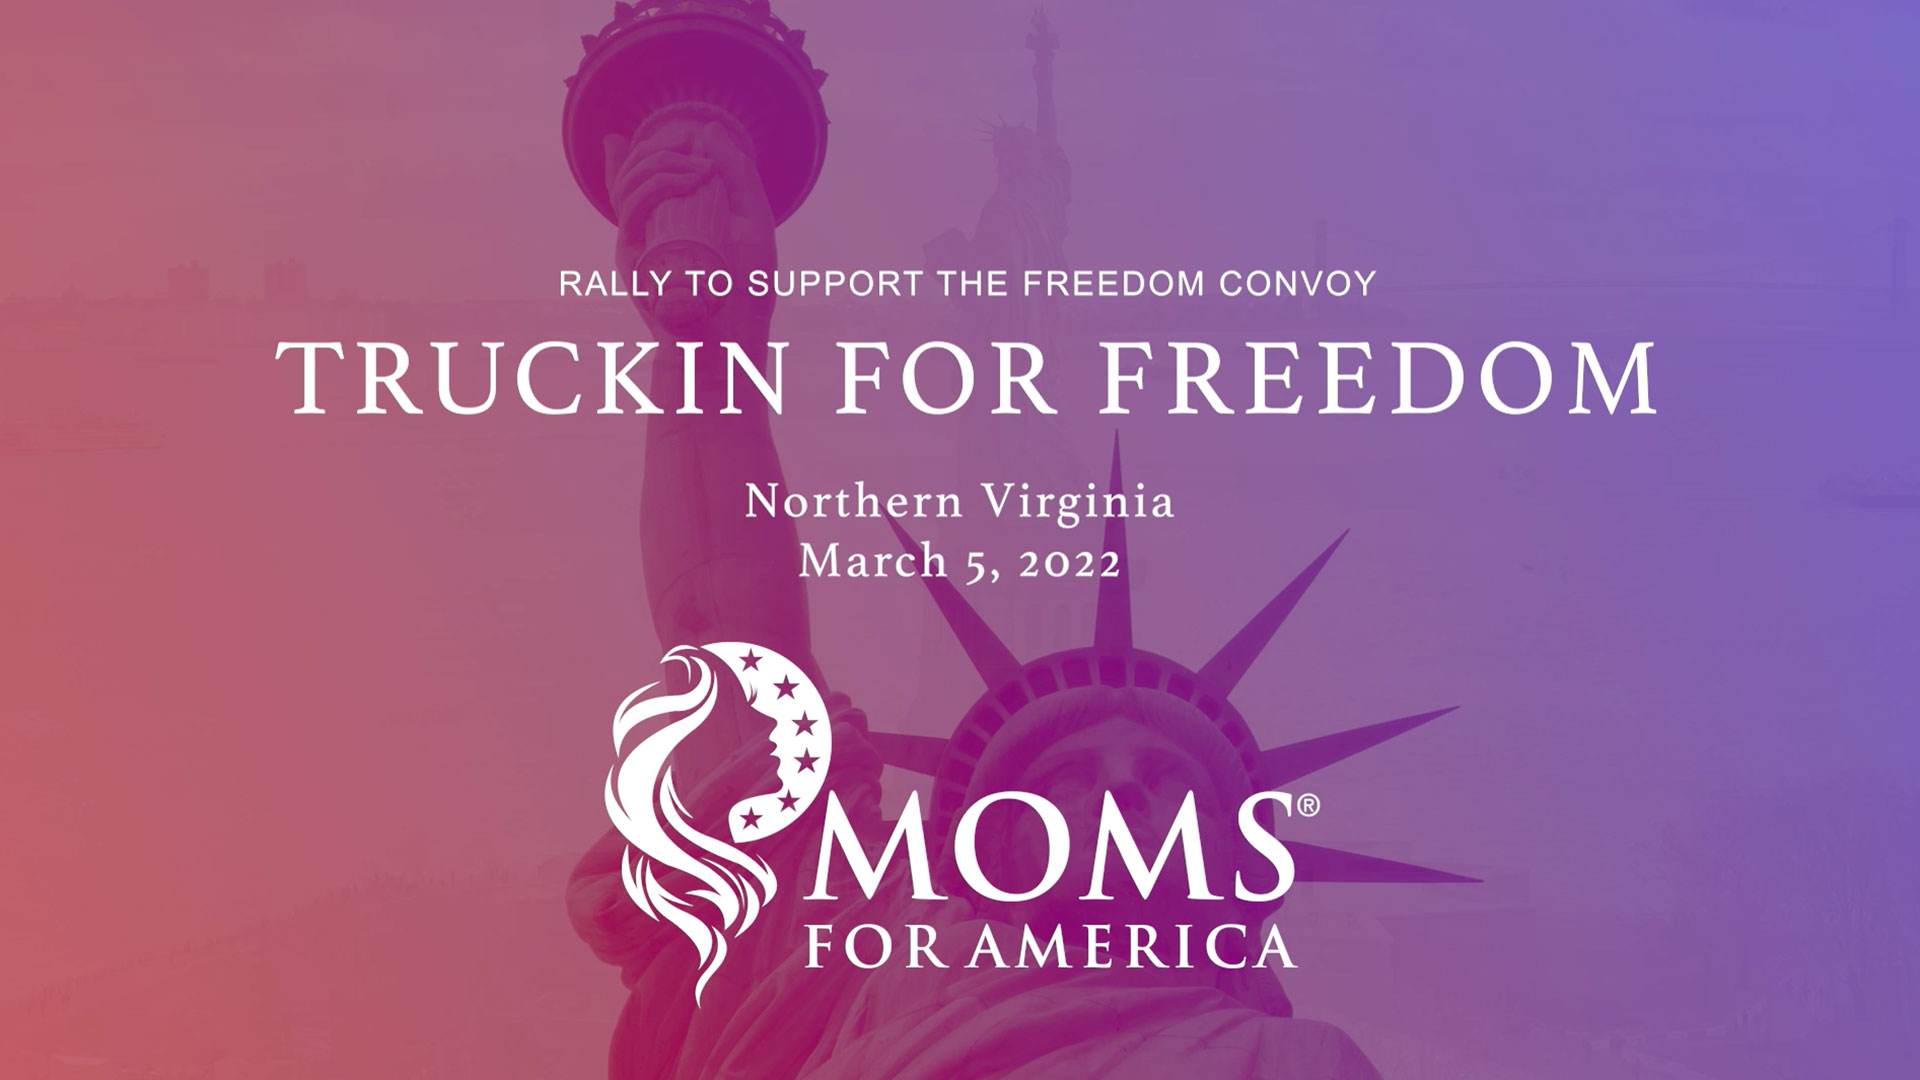 Truckin for Freedom Rally - Northern Virginia